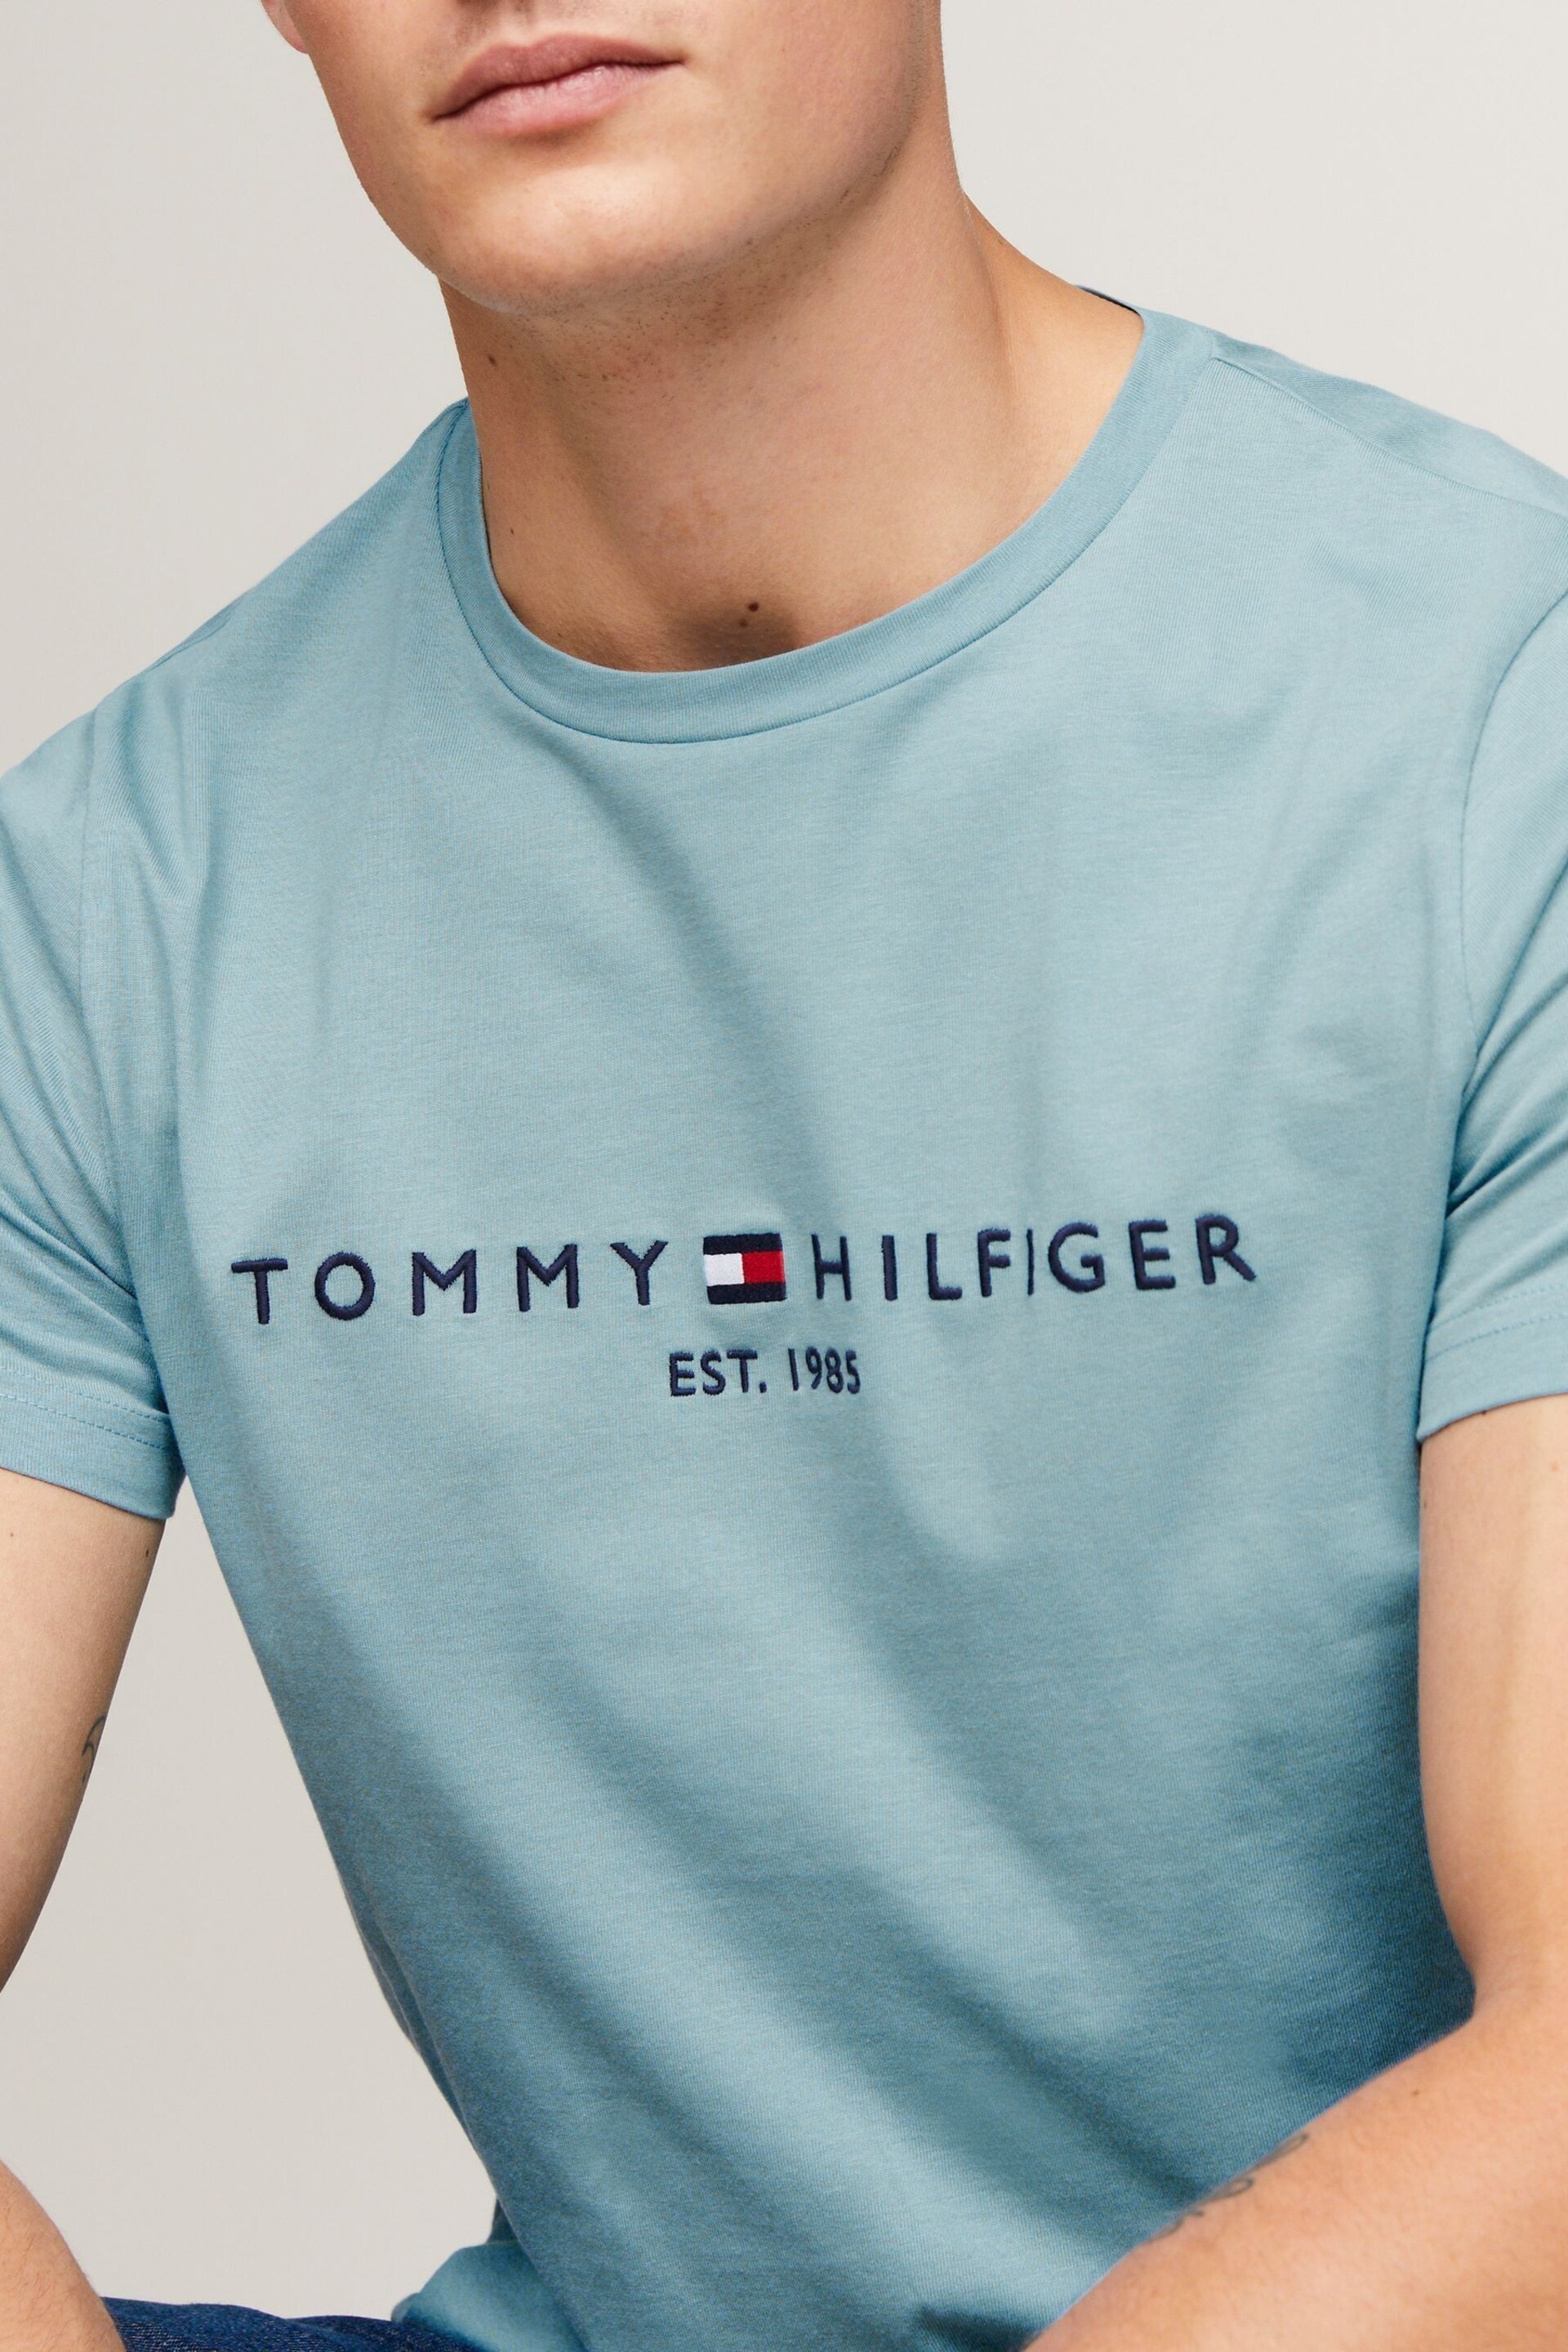 Tommy Hilfiger Bluye Logo T-Shirt - Image 4 of 4